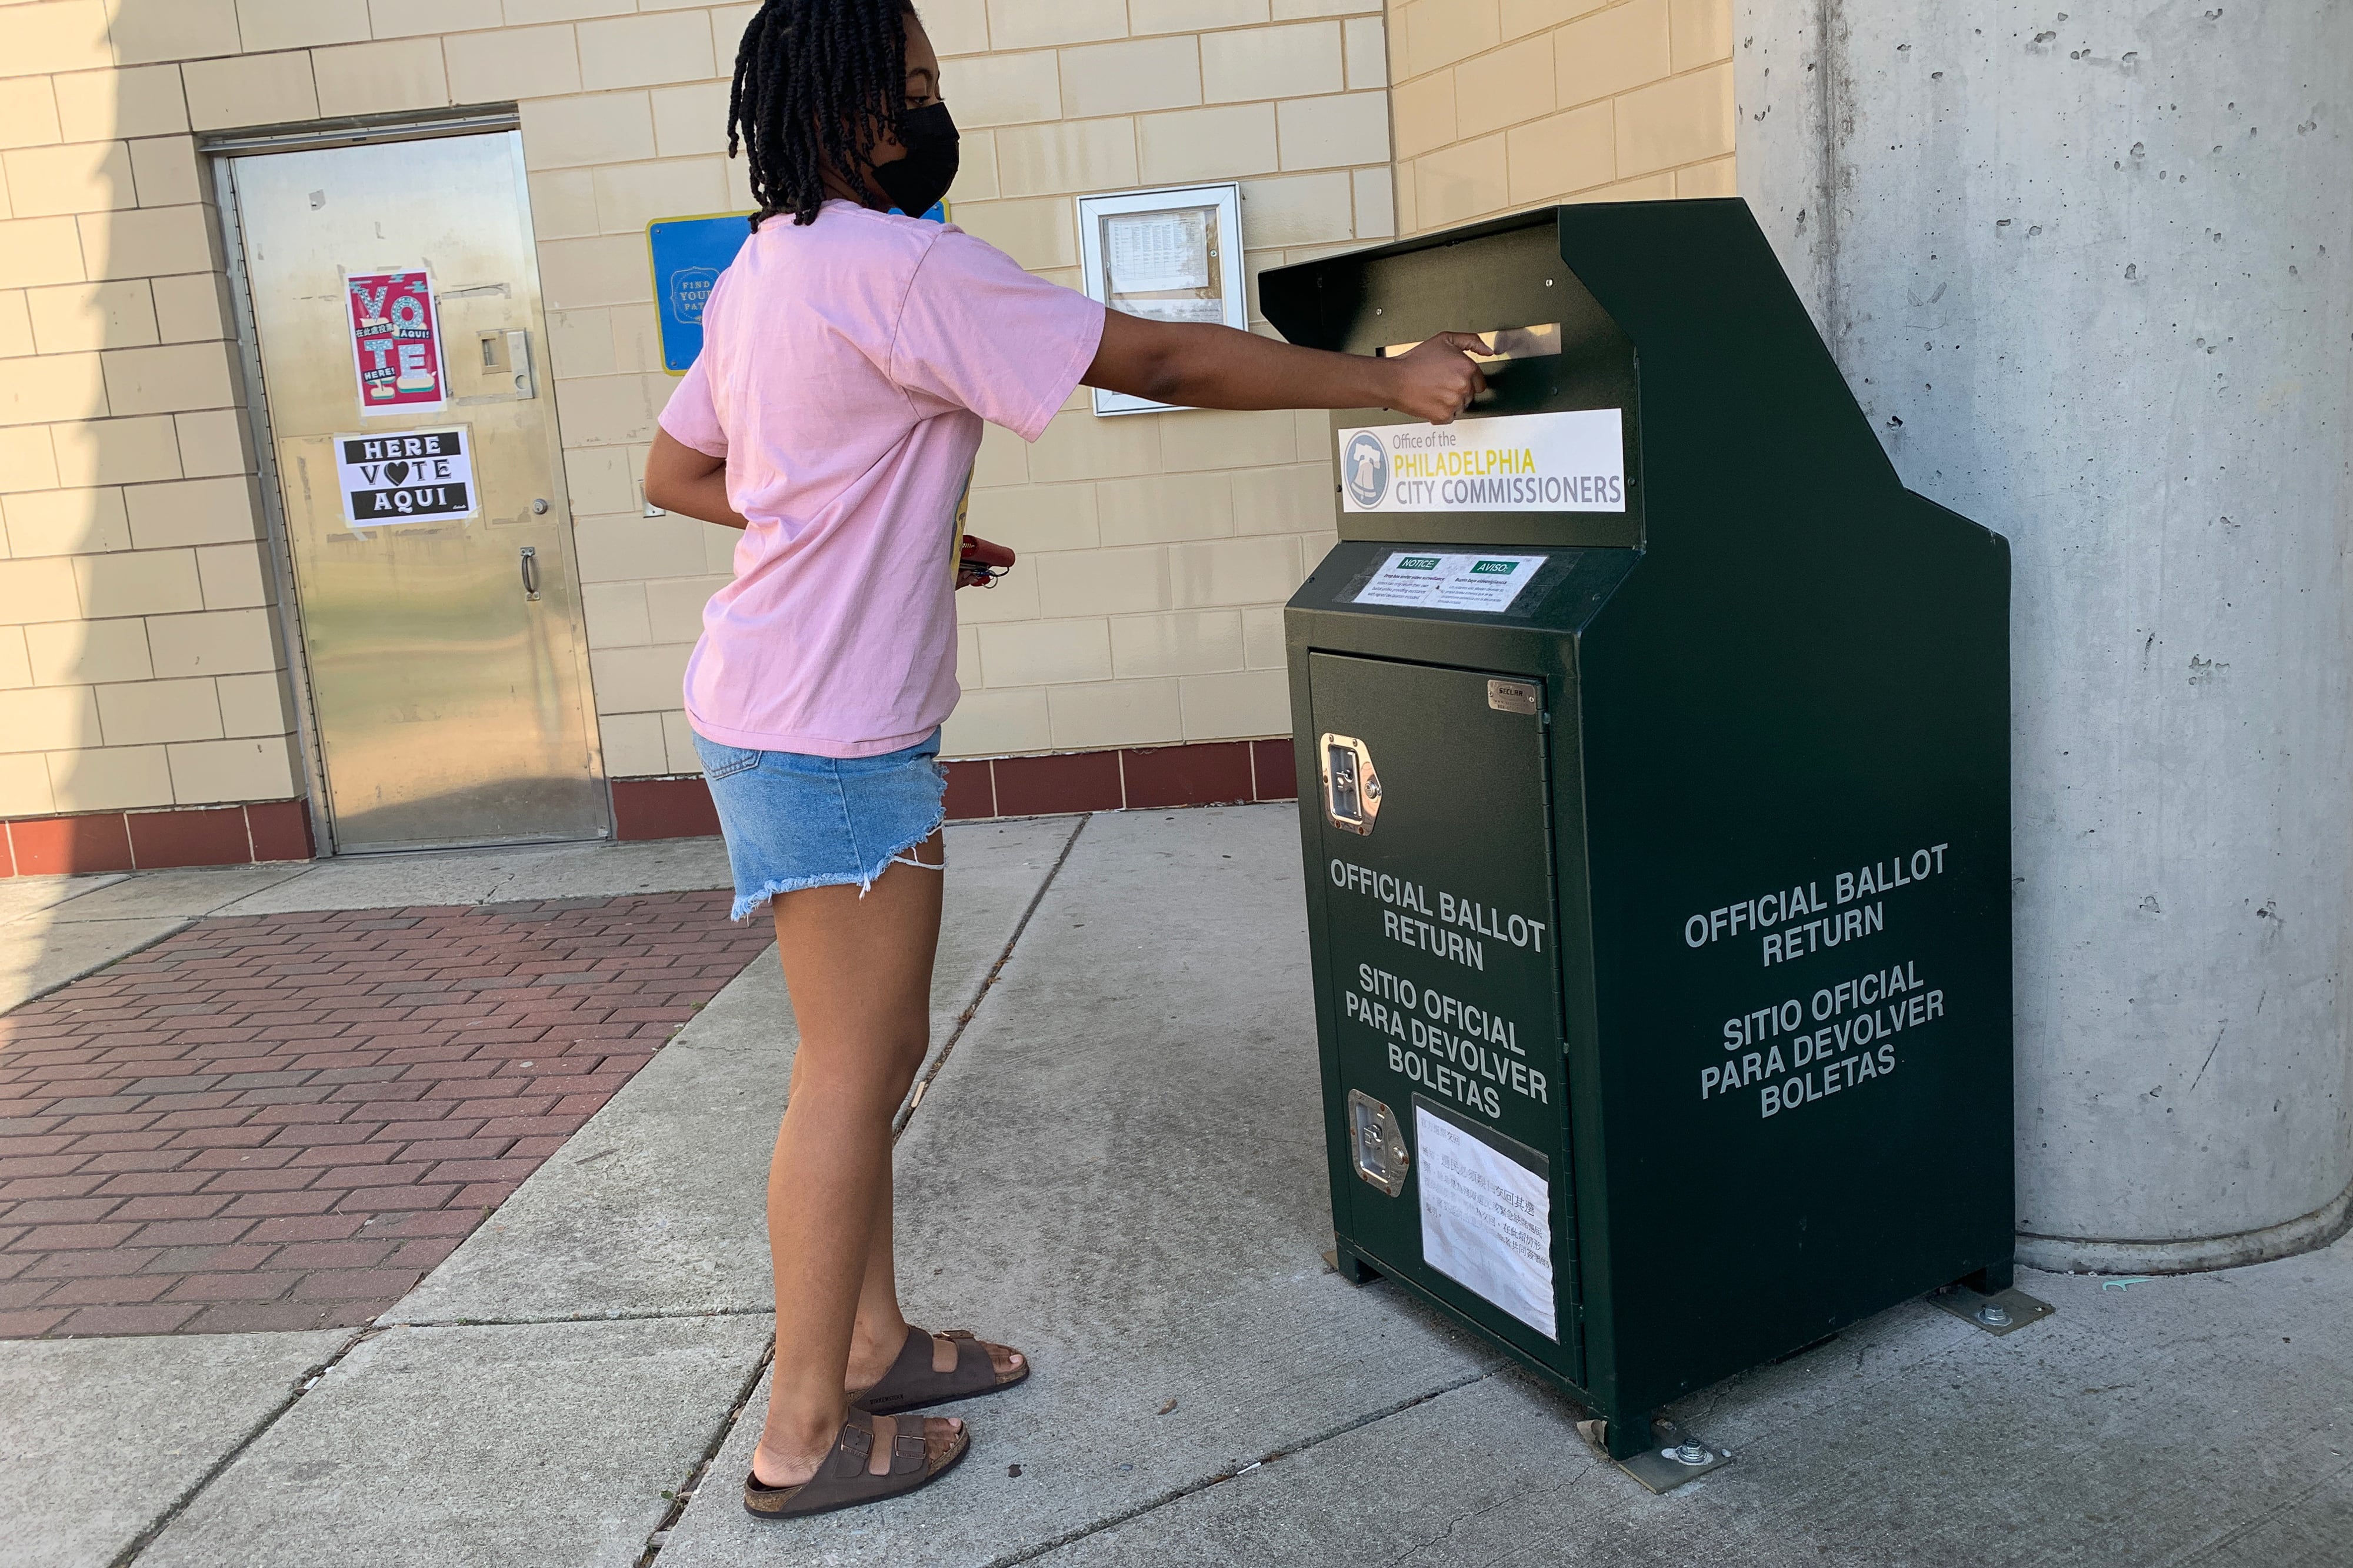 A woman in a pink shirt and shorts puts a ballot through the slot of a ballot dropbox.